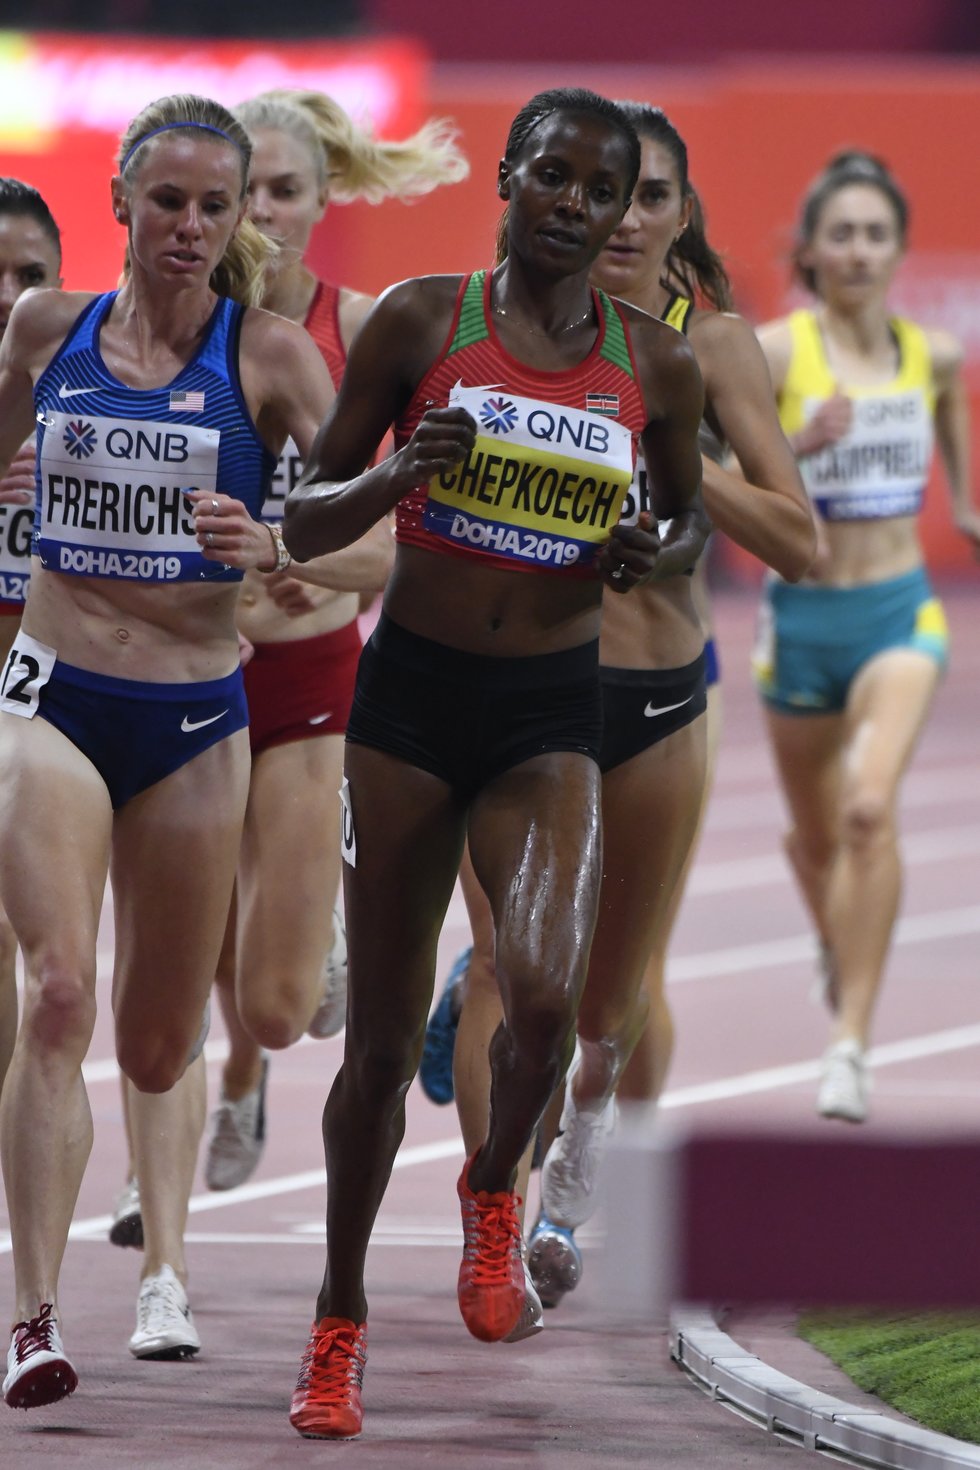 VM friidrett 2019 Doha - Courtney FRERICHS - Beatrice CHEPKOECH - forsøk 3000 m hinder